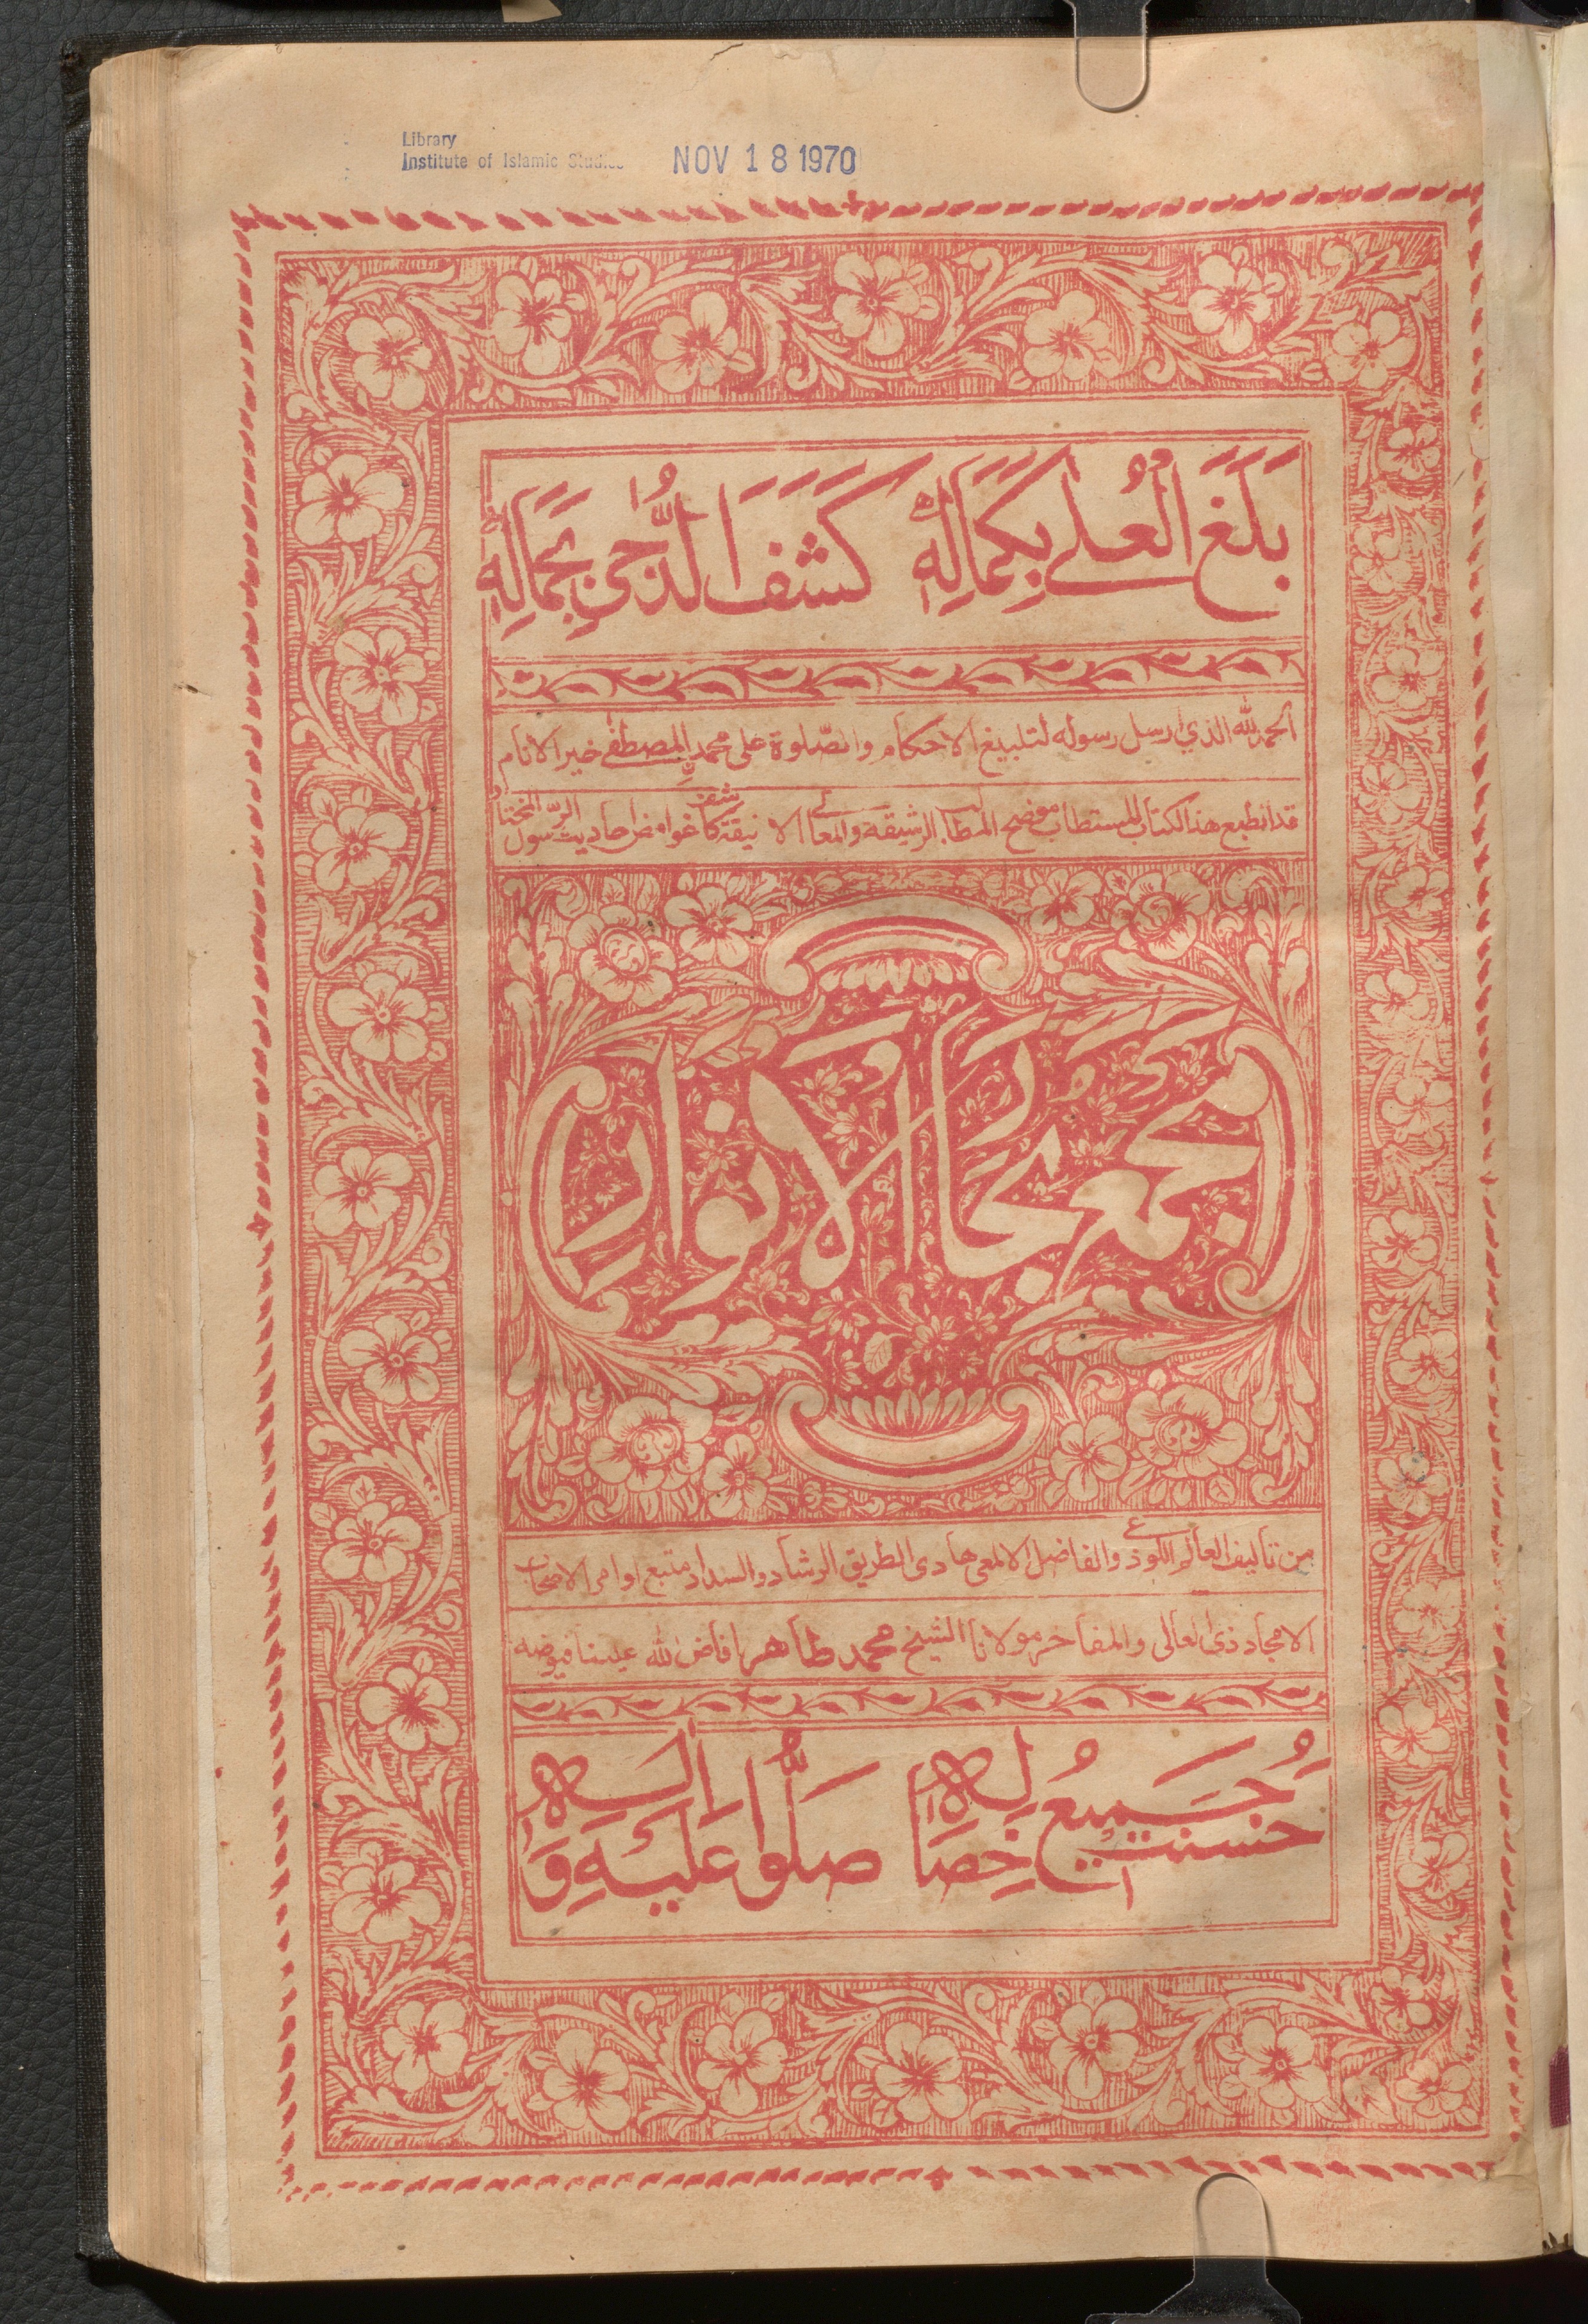 Tūnisī, Muḥammad ibn ʻUmar. Hādhā kitāb Tashhīdh al-adhhān bi-sīrat bilād al-ʻArab wa-al-Sūdān. Paris  Duprat, 1850.